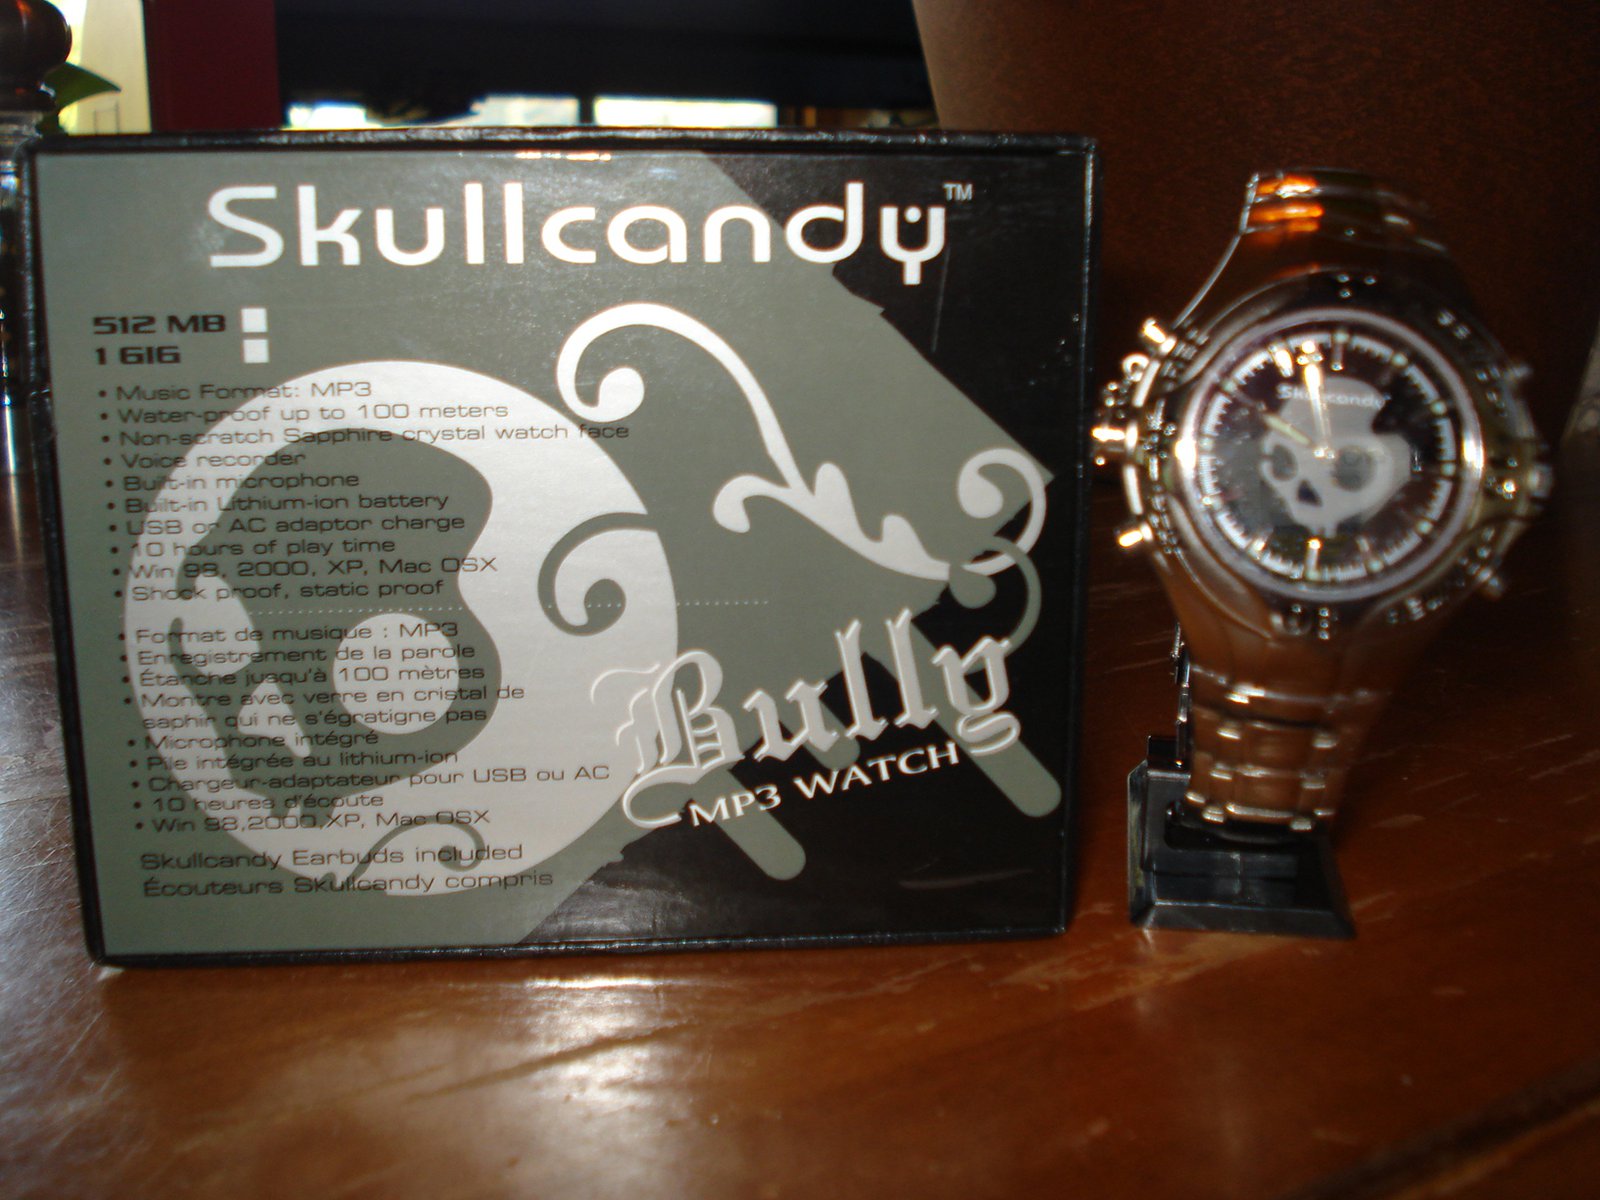 Skullcandy MP3 Watch